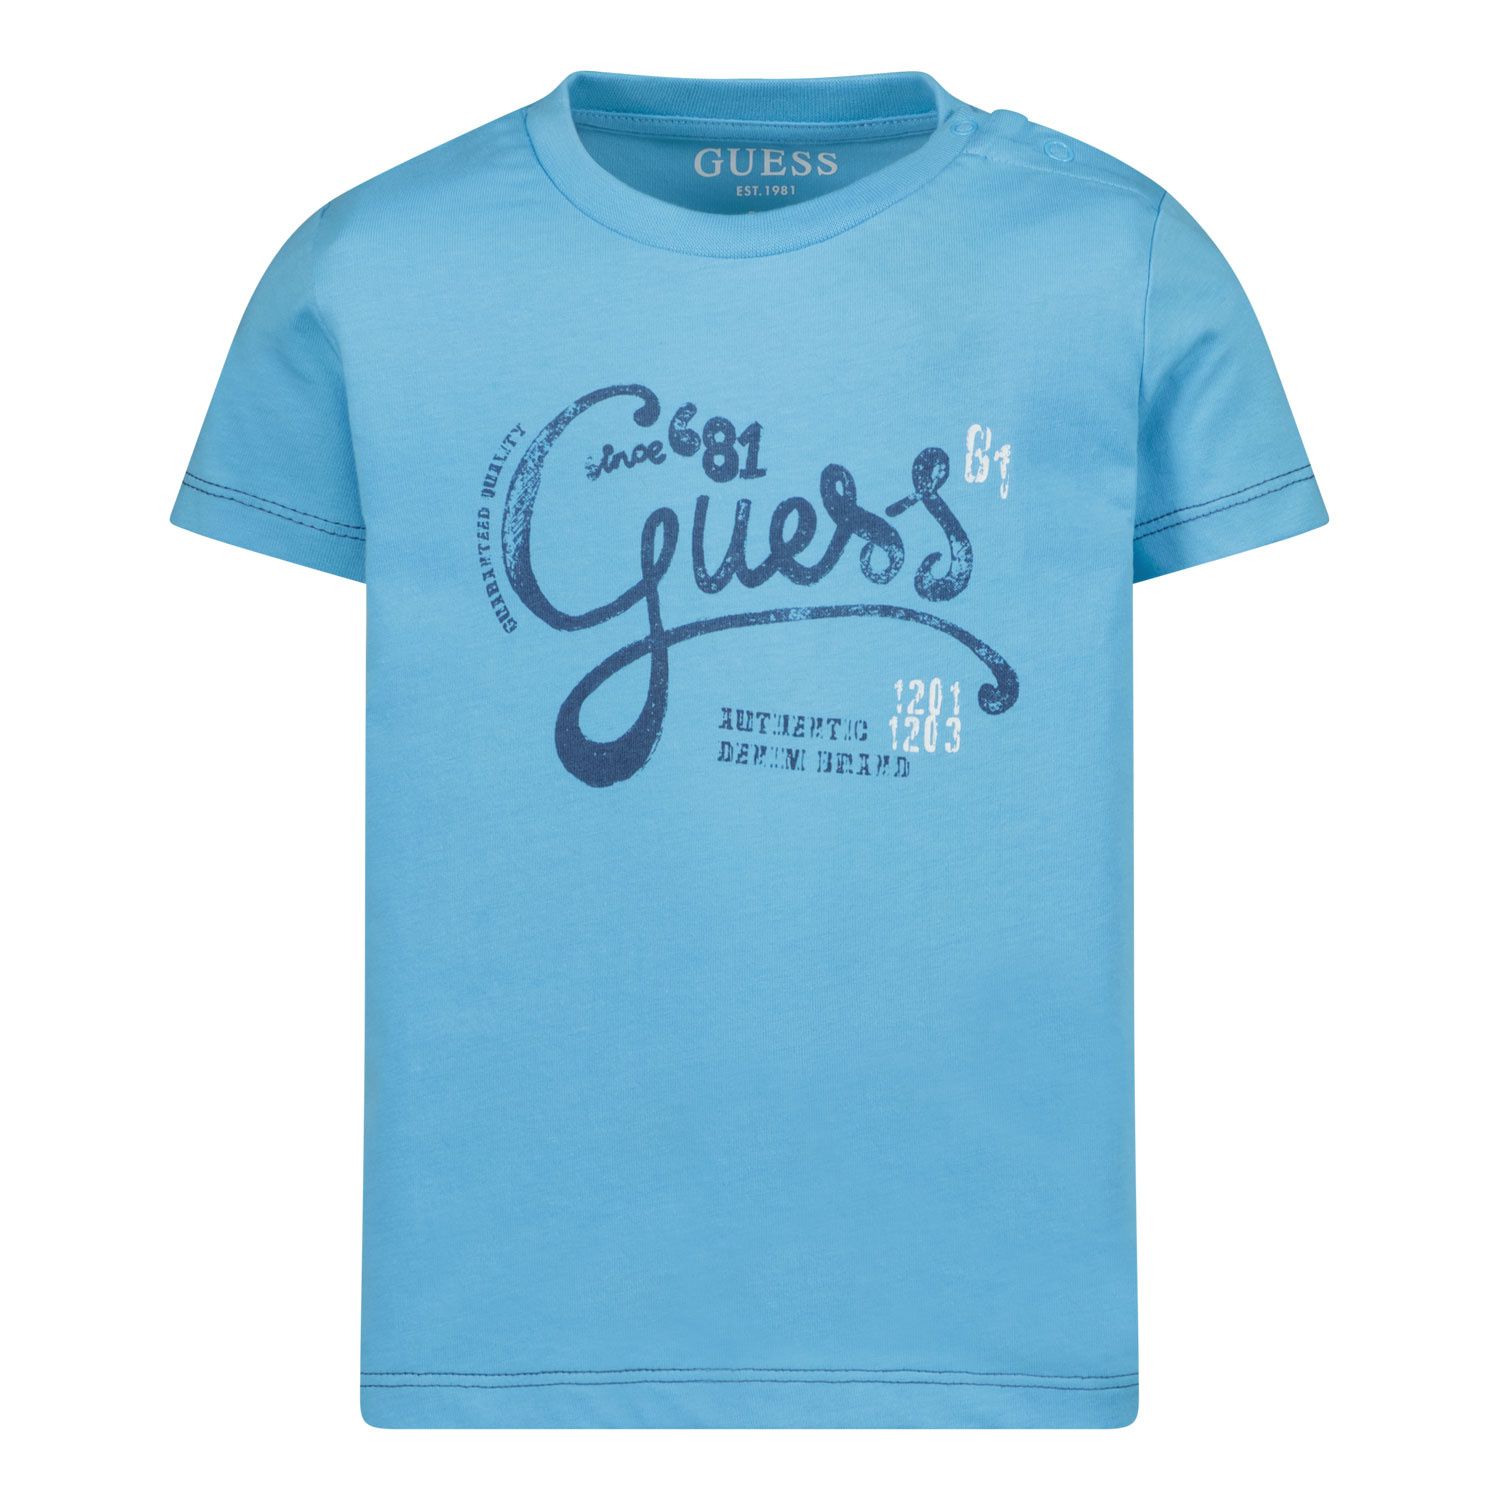 Afbeelding van Guess I2GI02 baby t-shirt turquoise